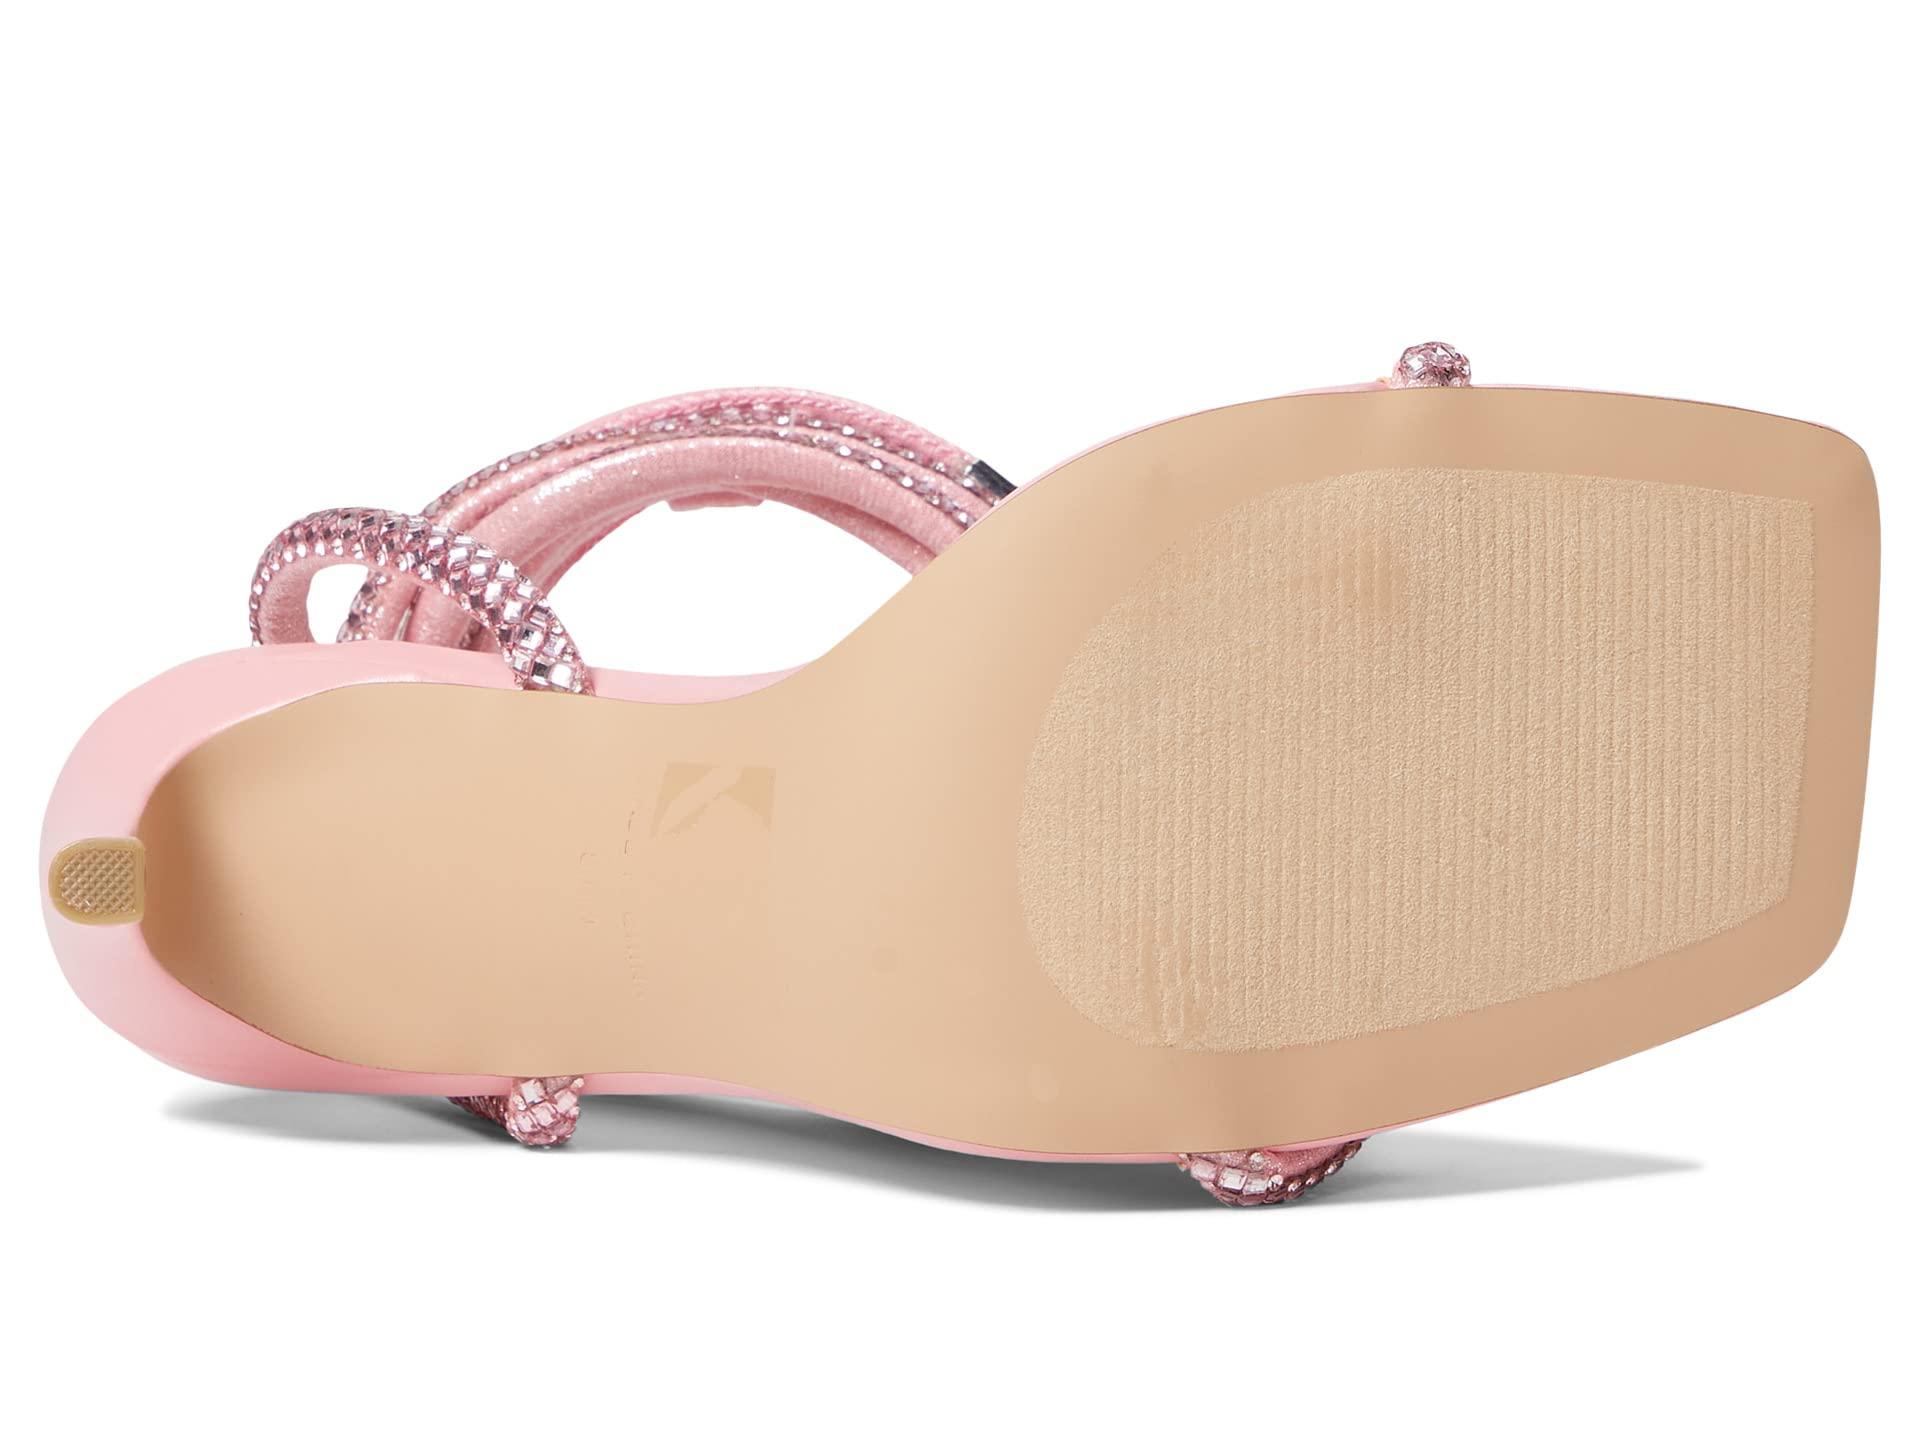 Steve Madden Uplift-r Heeled Sandal in Pink | Lyst